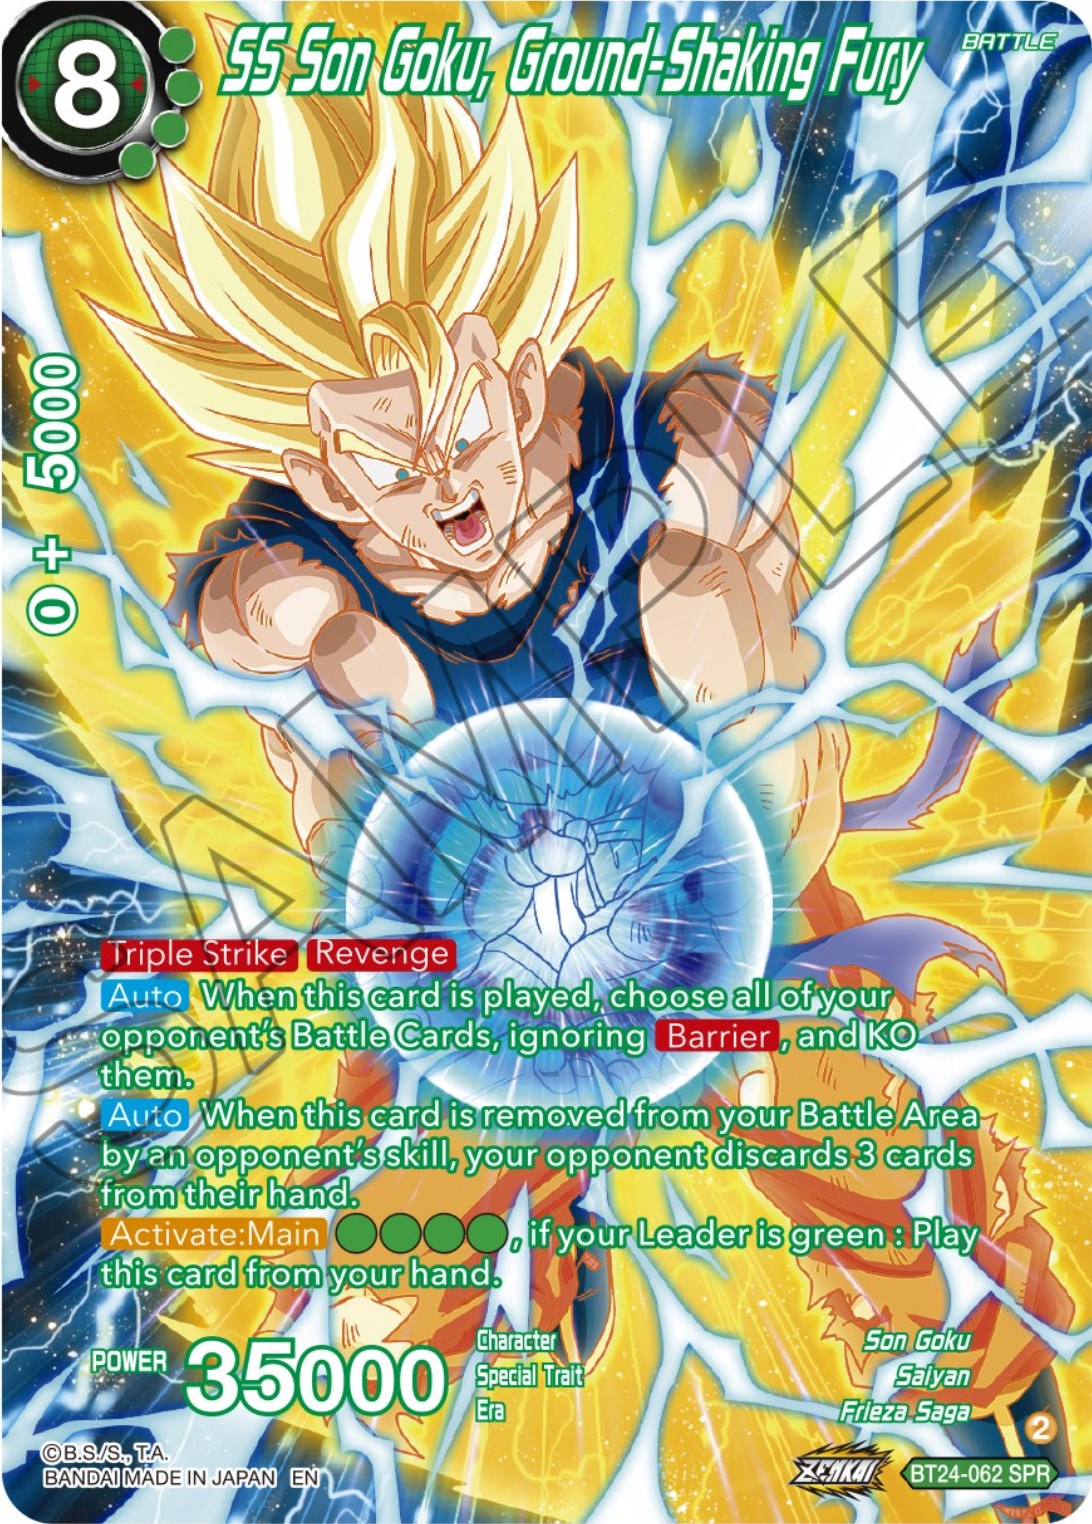 SS Son Goku, Ground-Shaking Fury (SPR) (BT24-062) [Beyond Generations] | Devastation Store